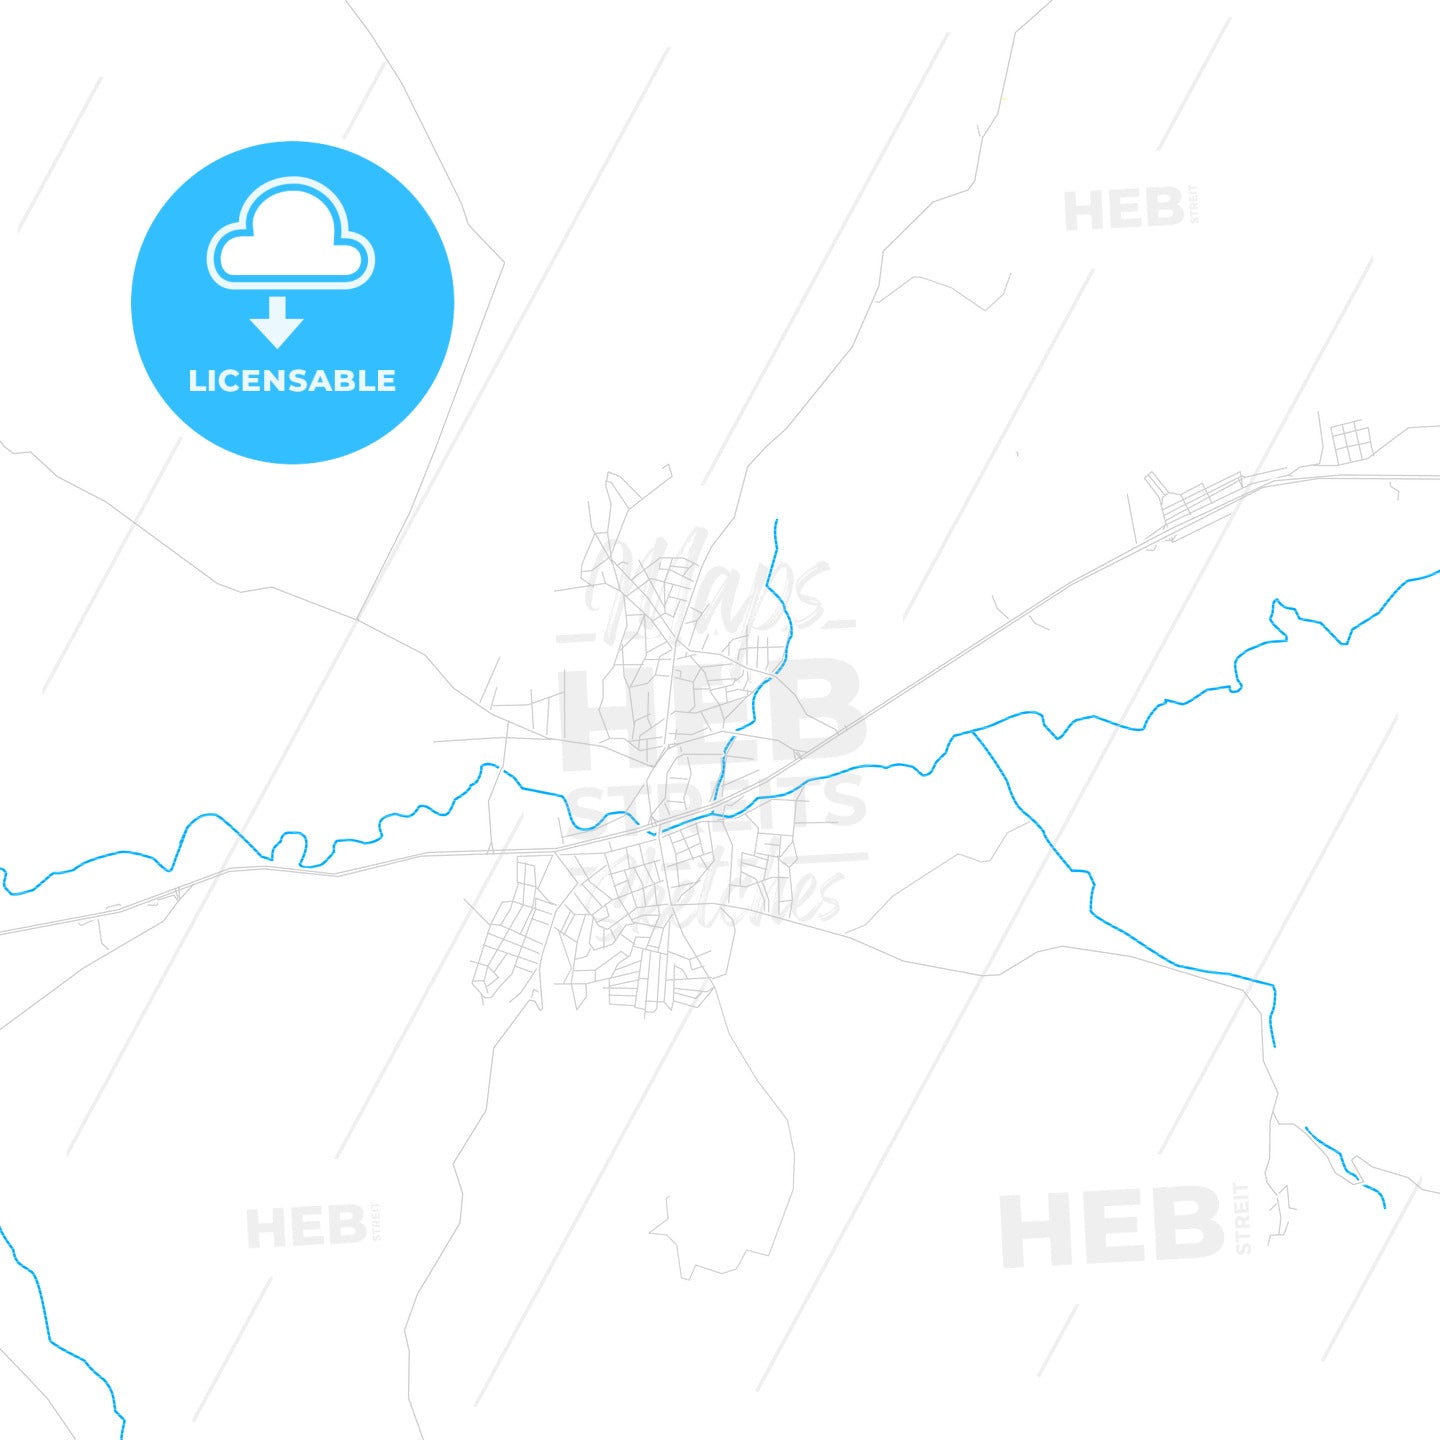 Sungurlu, Turkey PDF vector map with water in focus